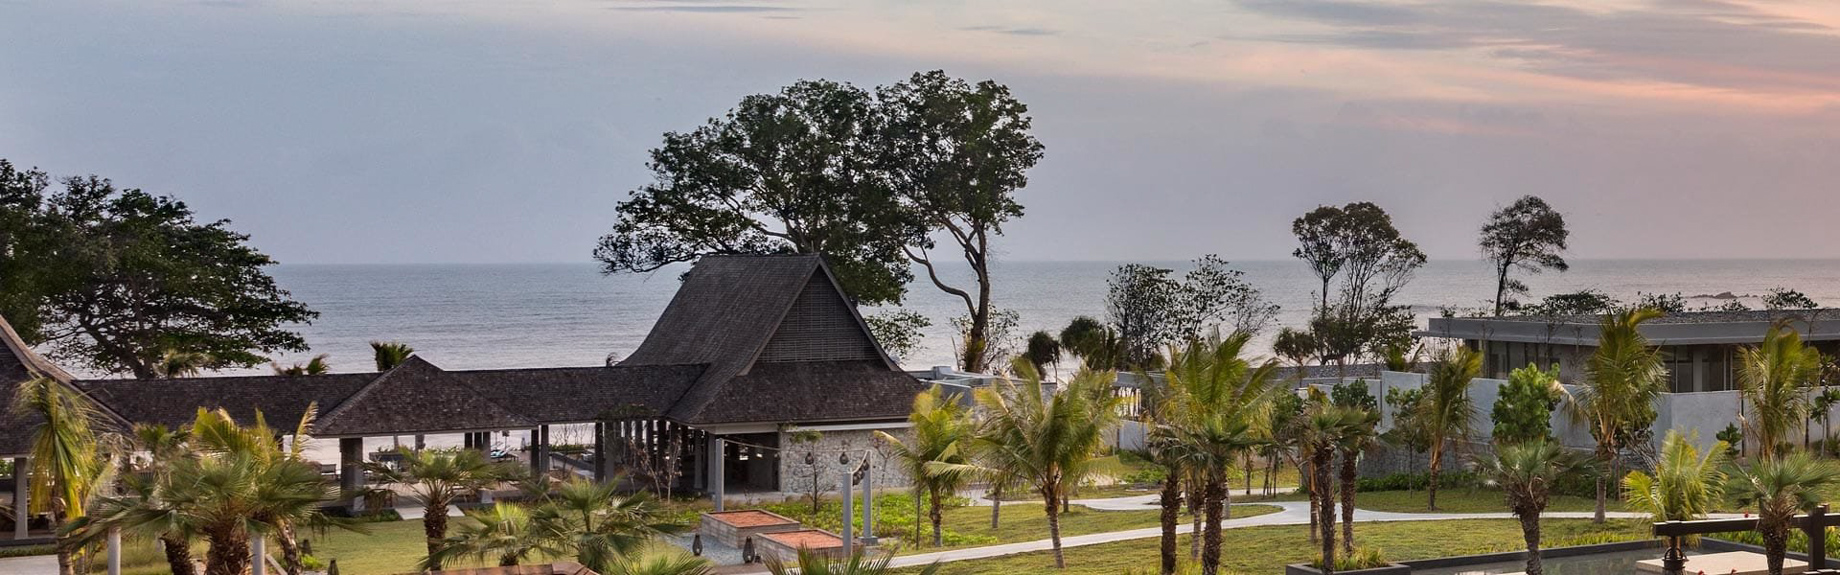 Anantara Desaru Coast Resort & Villas – Johor, Malaysia – Ocean View Sunset